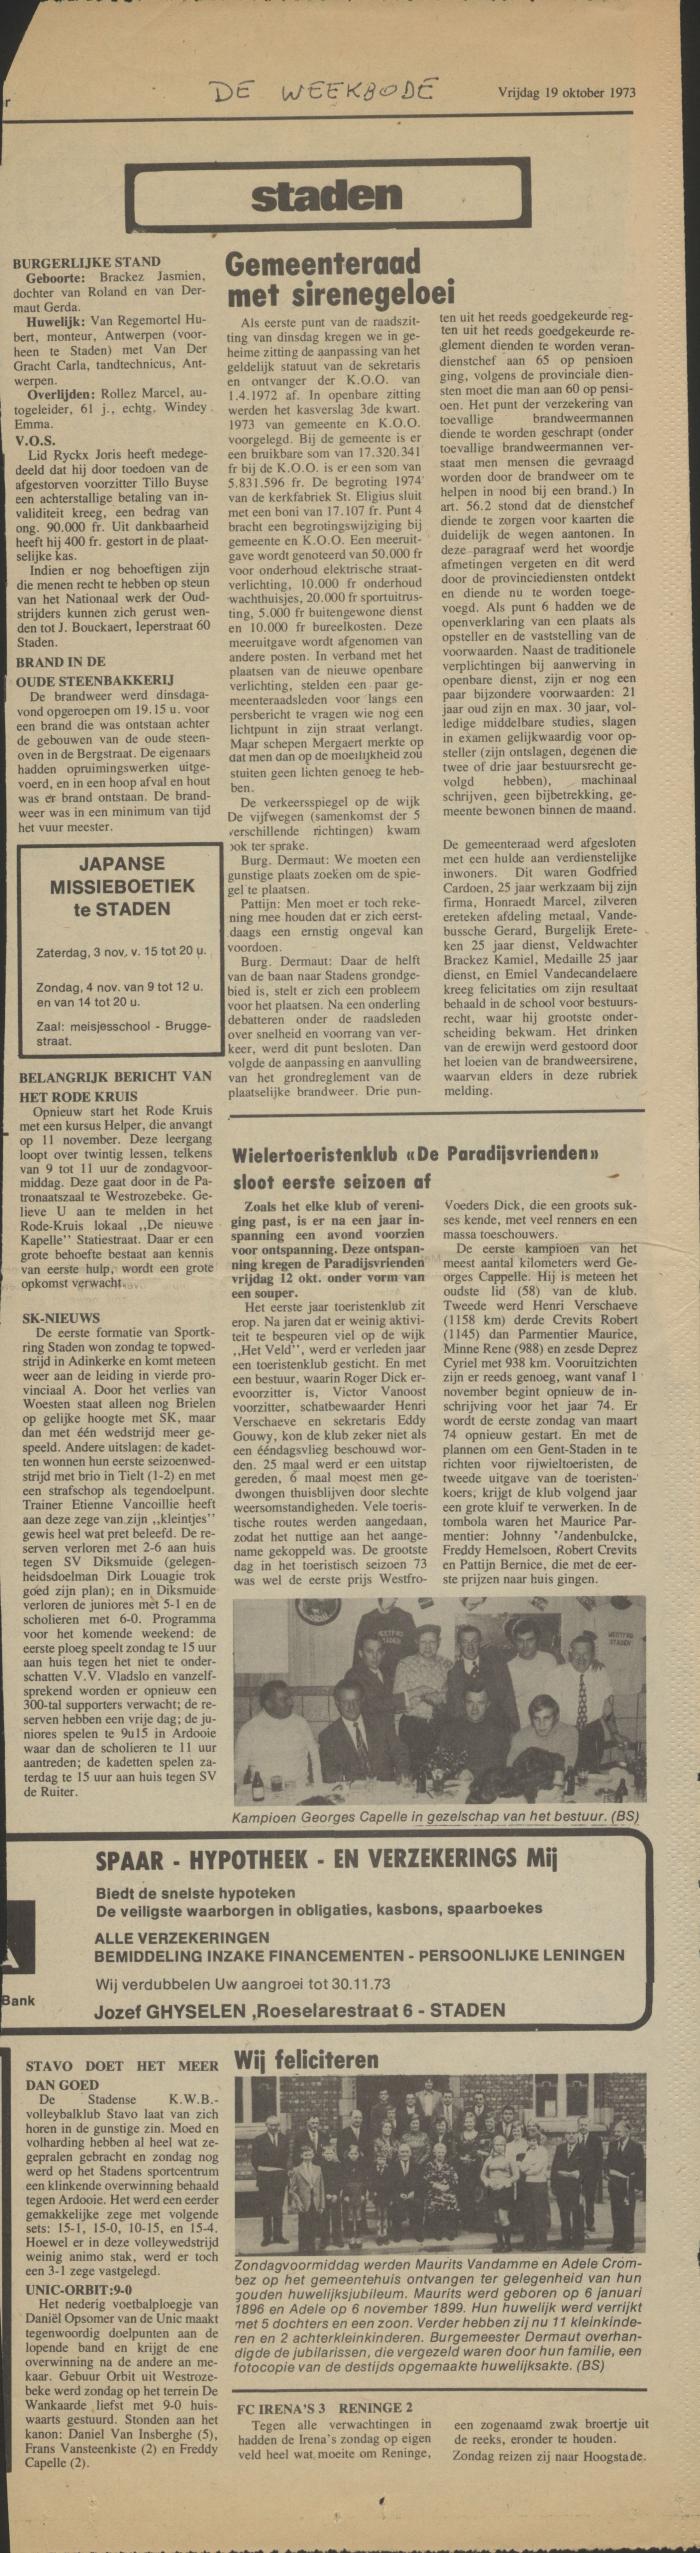 De Weekbode, 19 oktober 1973